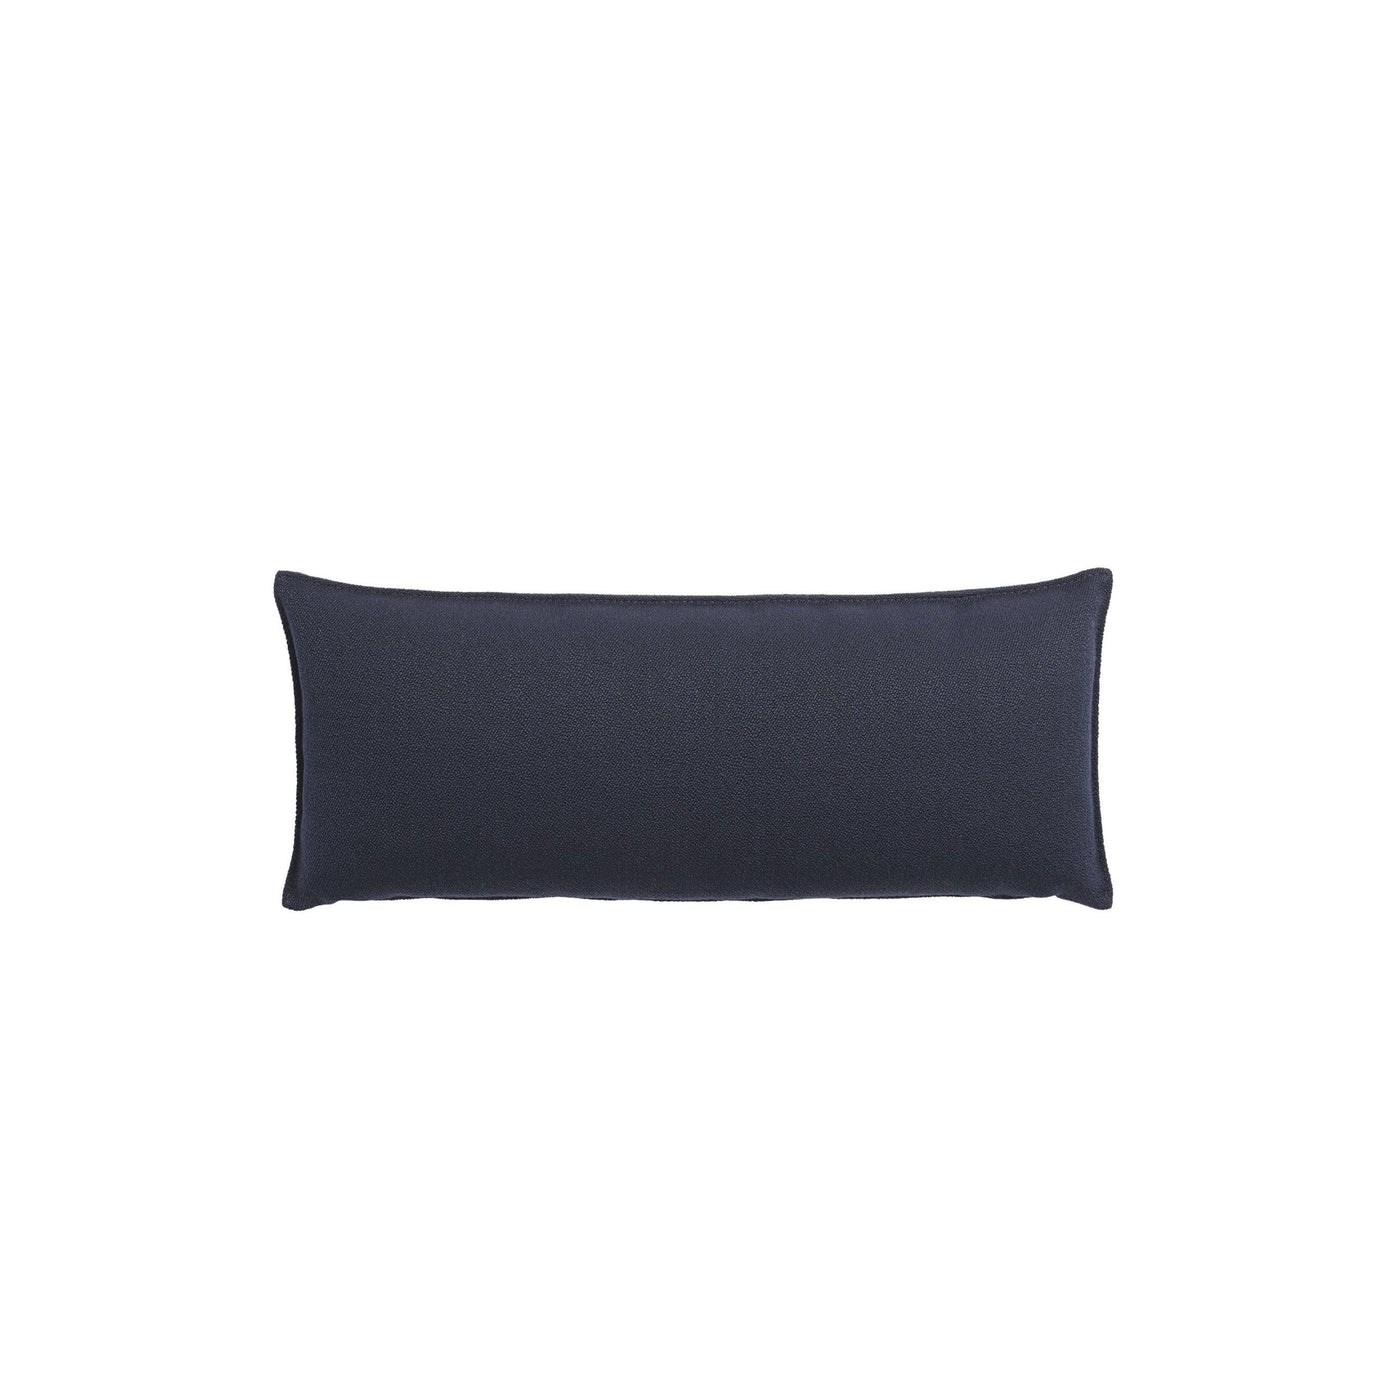 Muuto In Situ Modular Sofa cushion in Vidar 554 70x30cm. Made to order from someday designs. #colour_vidar-554